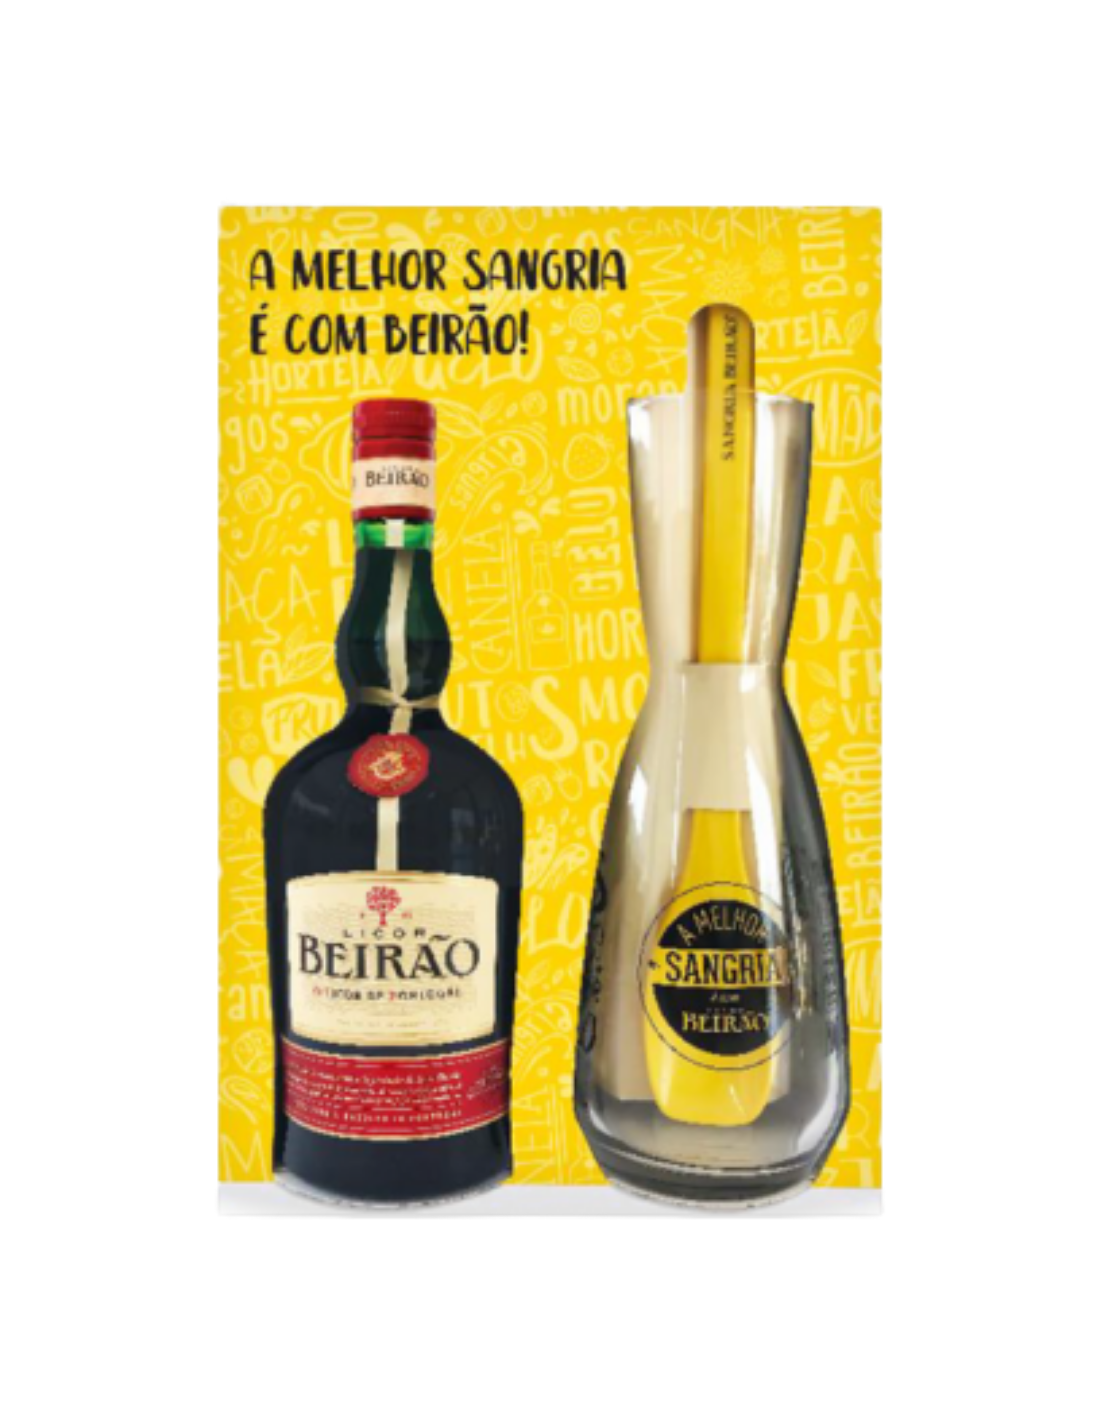 Lichior Licor Beirao + Vas Sangria + Lingura Mix Cocktail, 22% alc., 0.7L, Portugalia alcooldiscount.ro